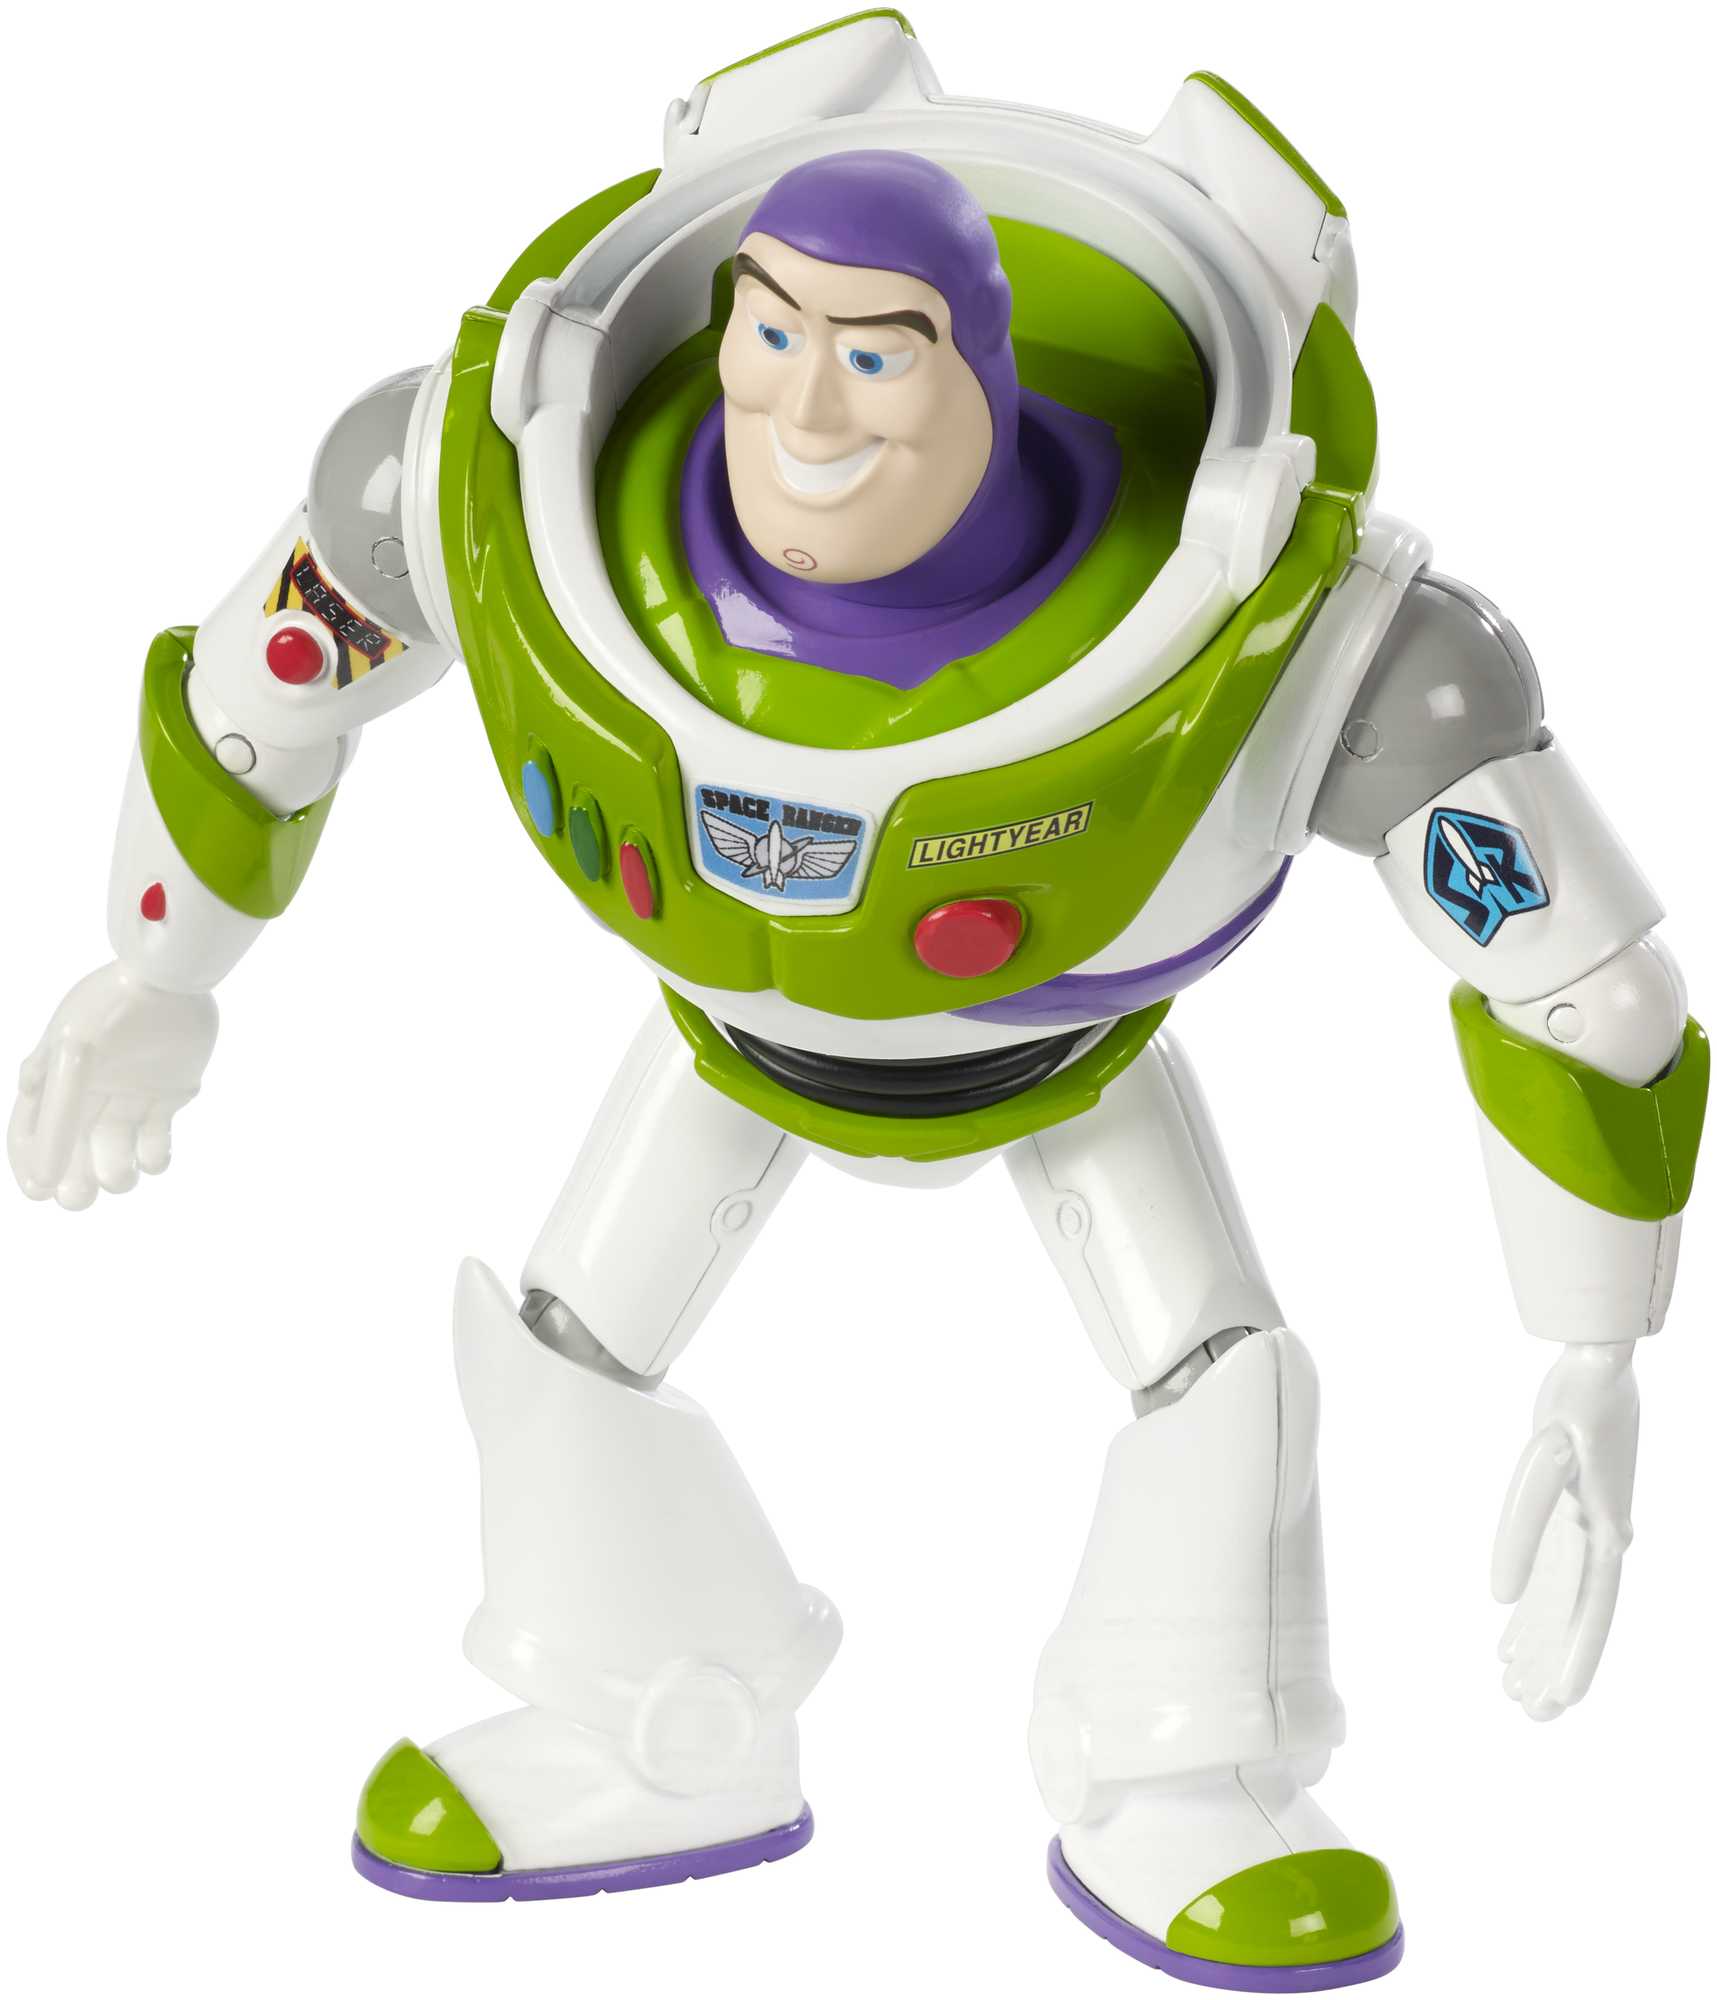 Disney Pixar Toy Story Buzz Lightyear Action Figure - image 5 of 6